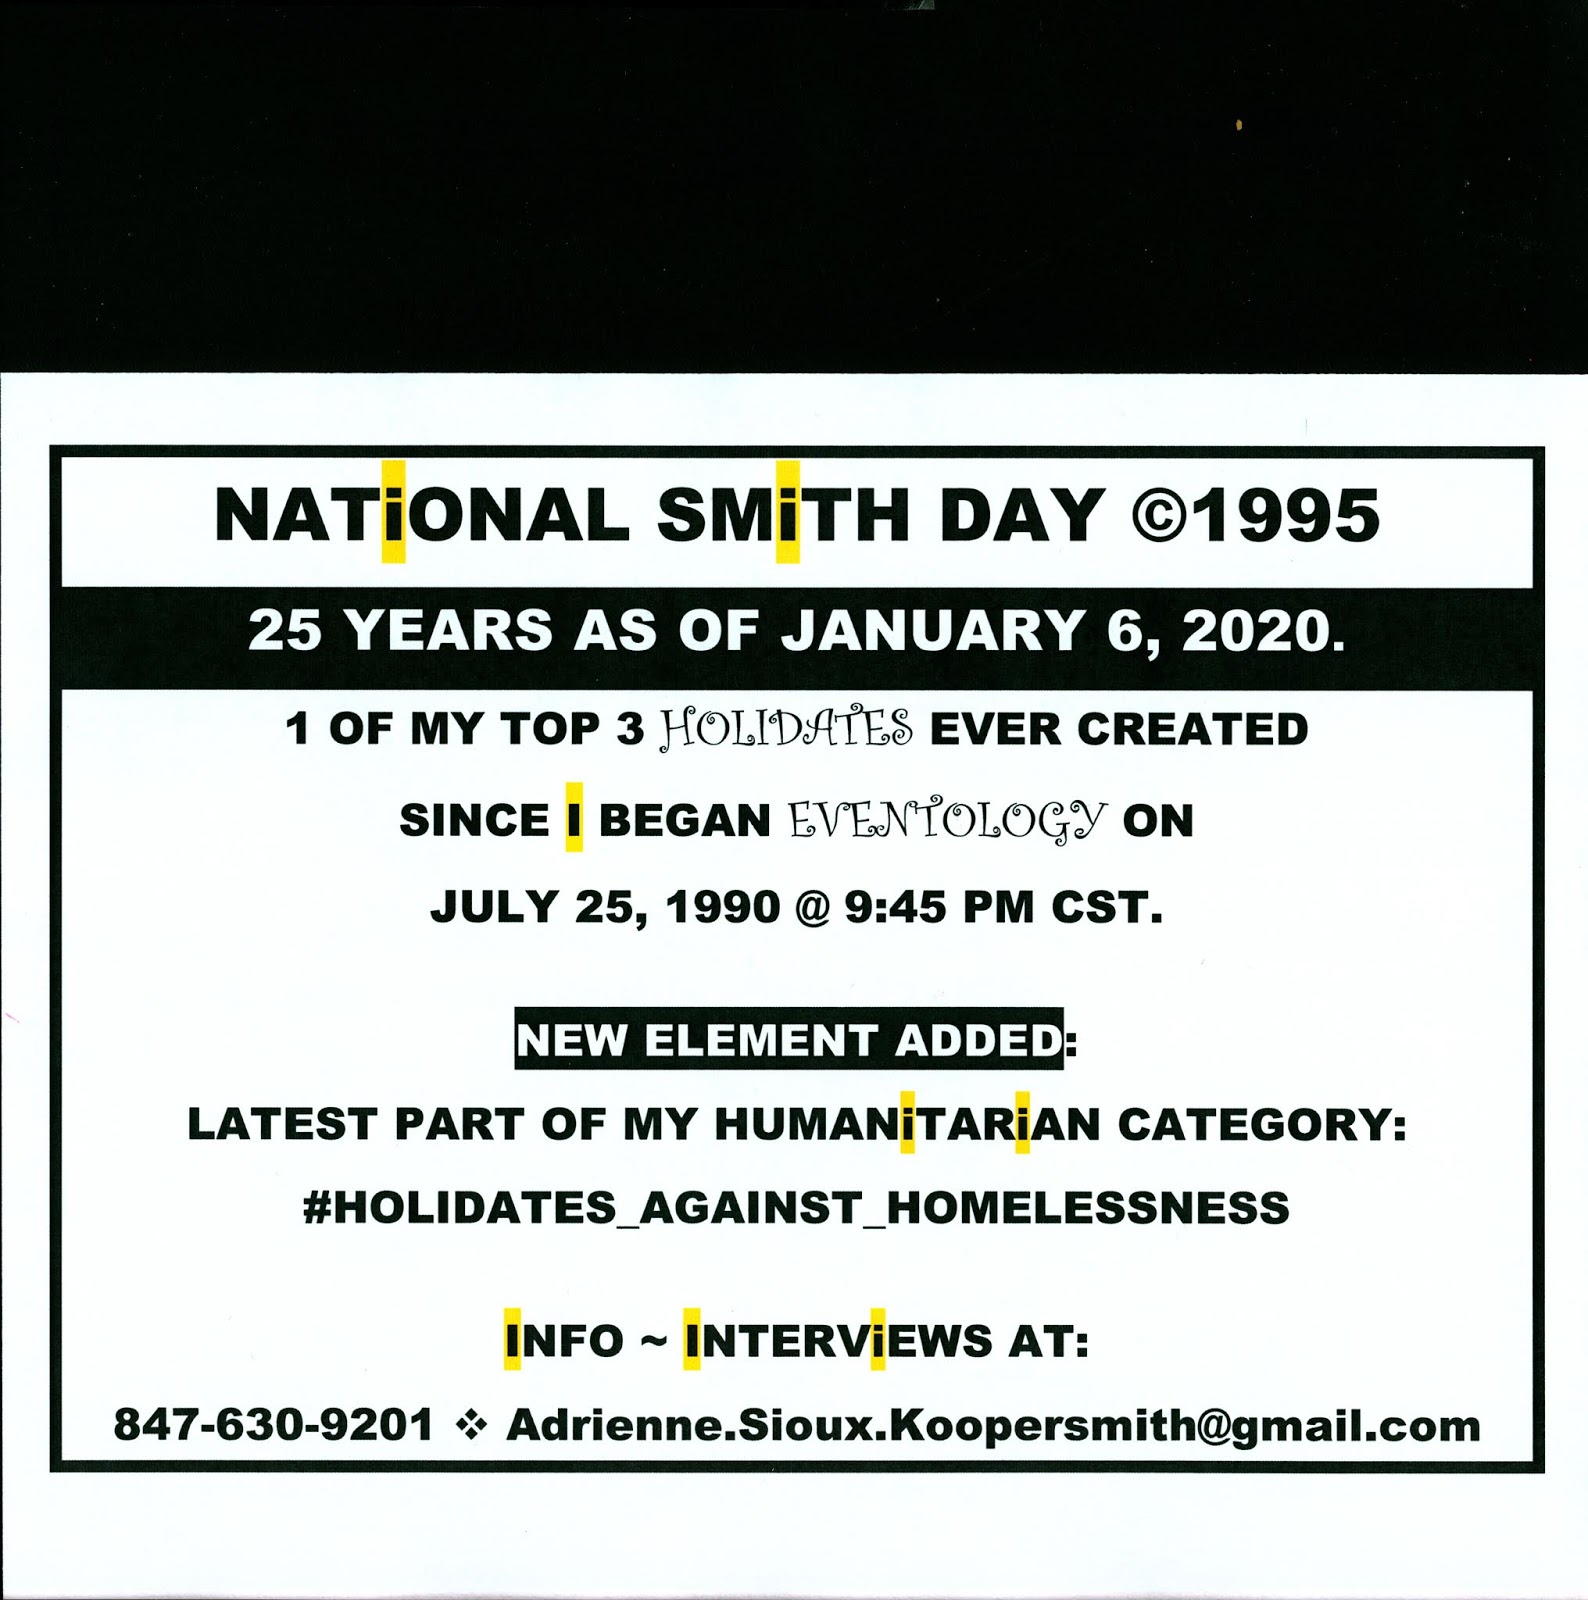 KOOPERSMITHin' National Smith Day Founder Adrienne Sioux Koopersmith